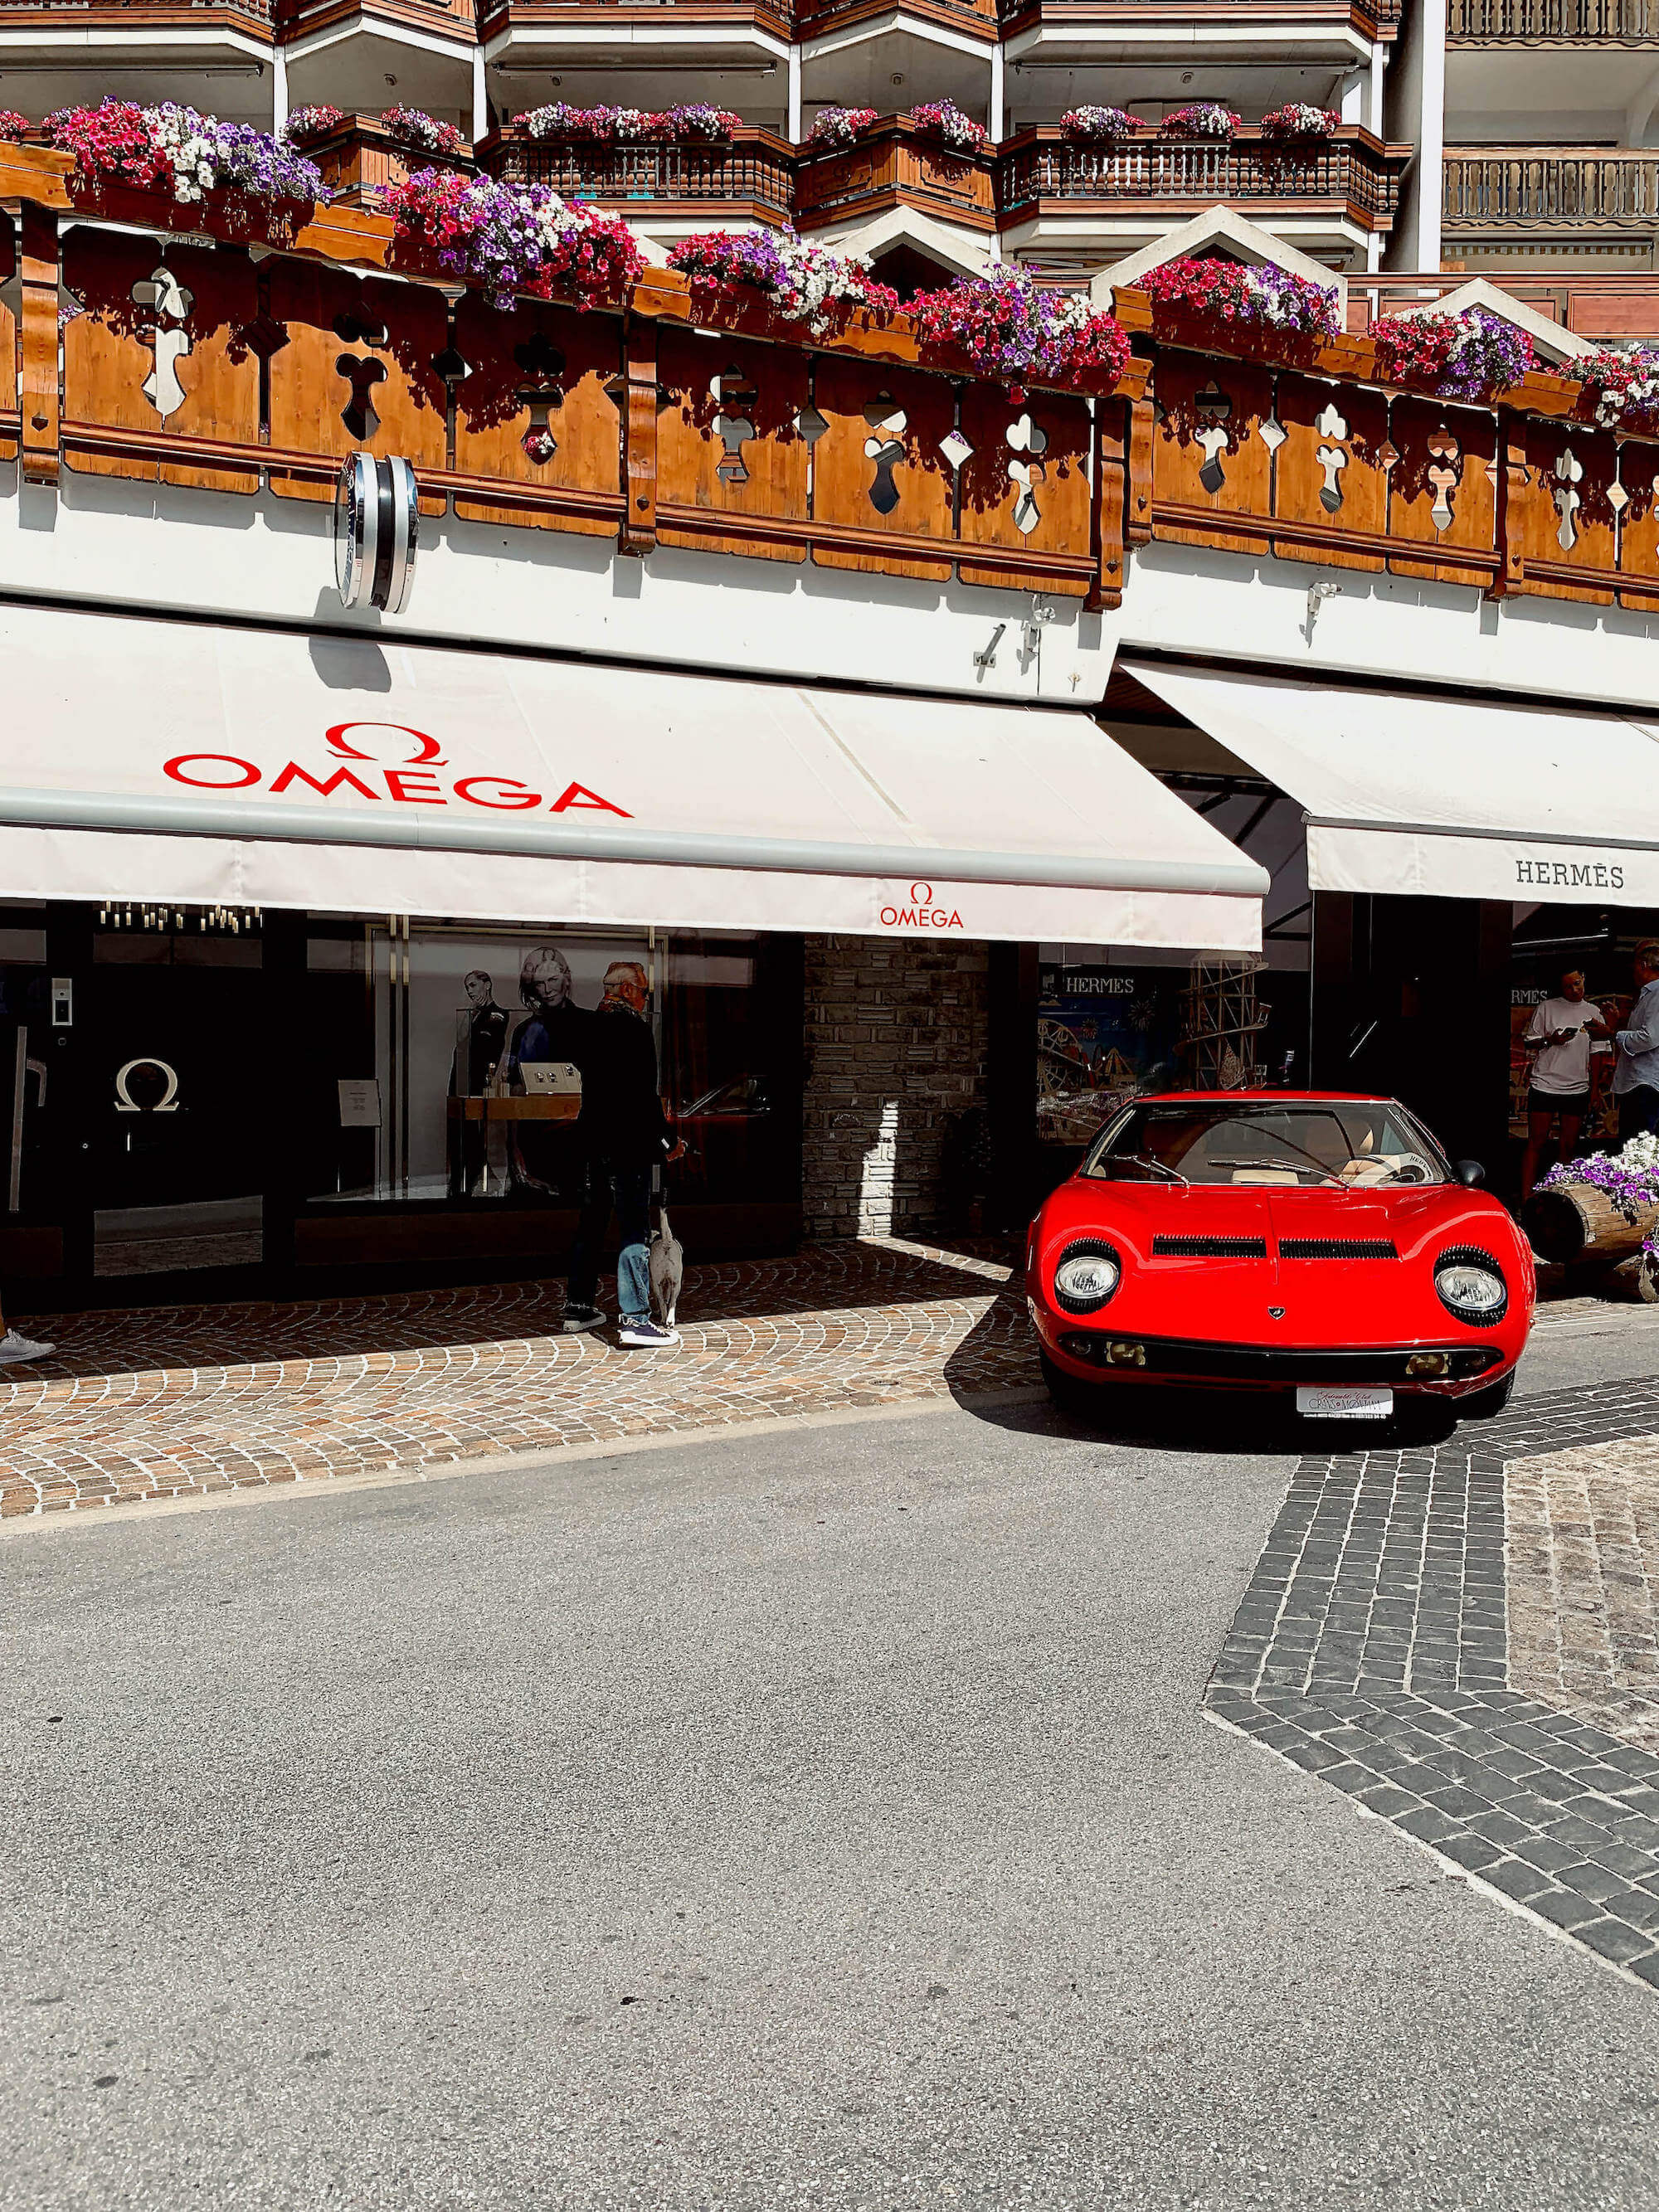 Omega and Ferrari in Crans